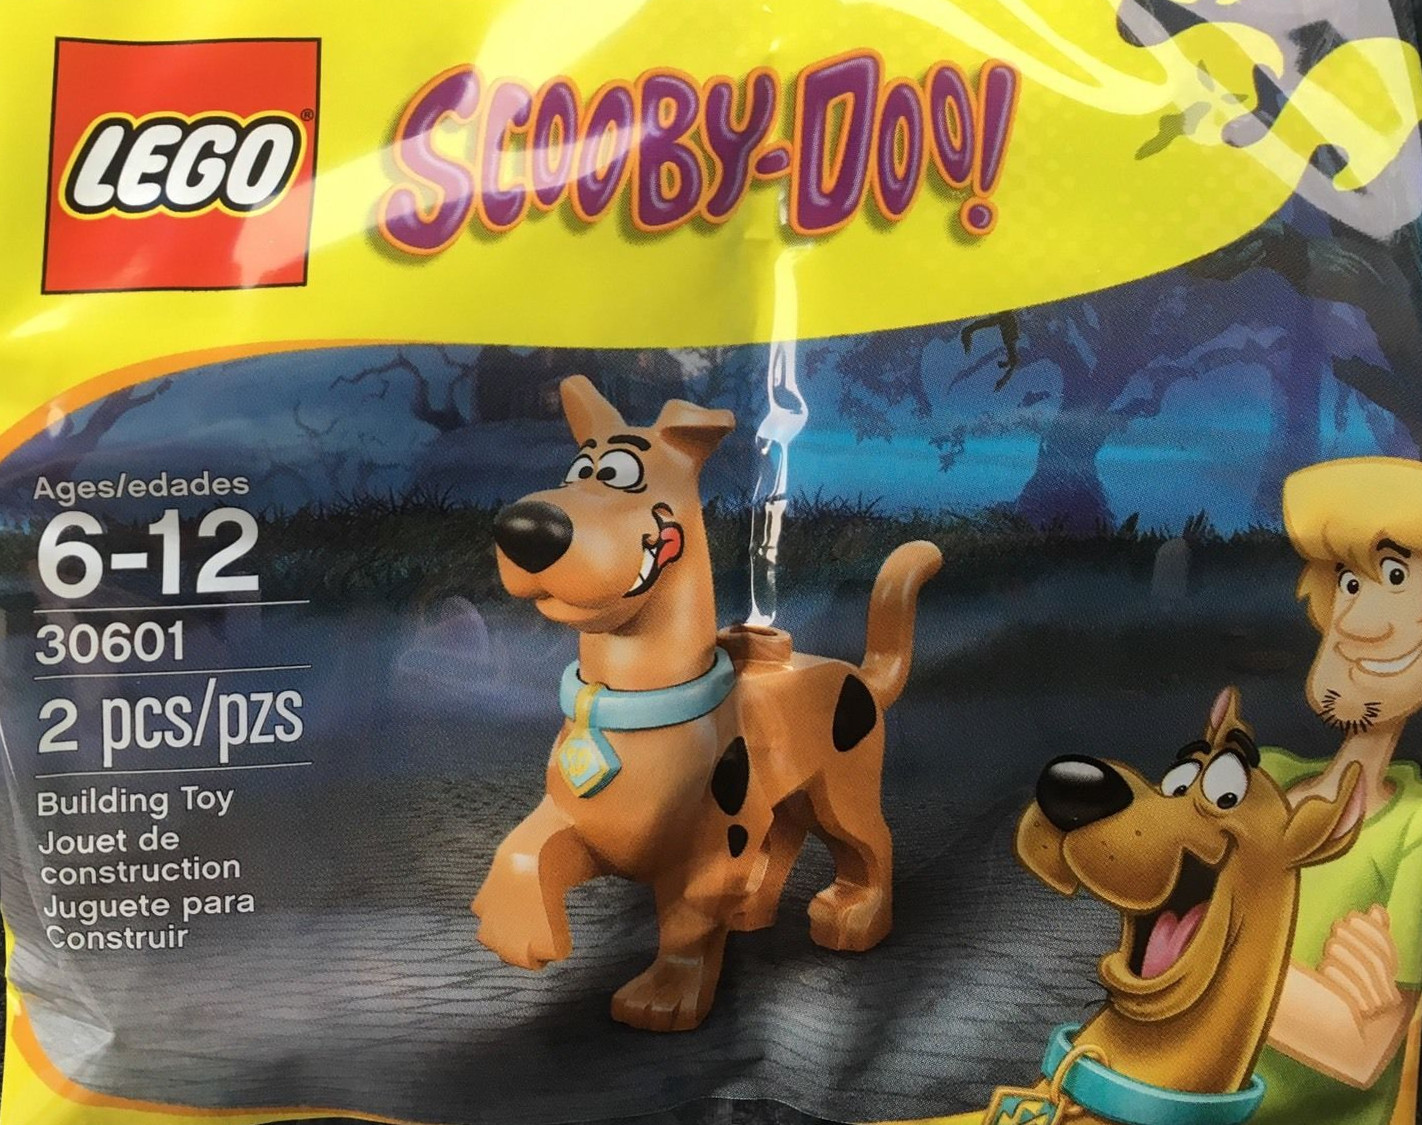 Lego Scooby Doo Sets Deals Discounted, Save 58% | jlcatj.gob.mx